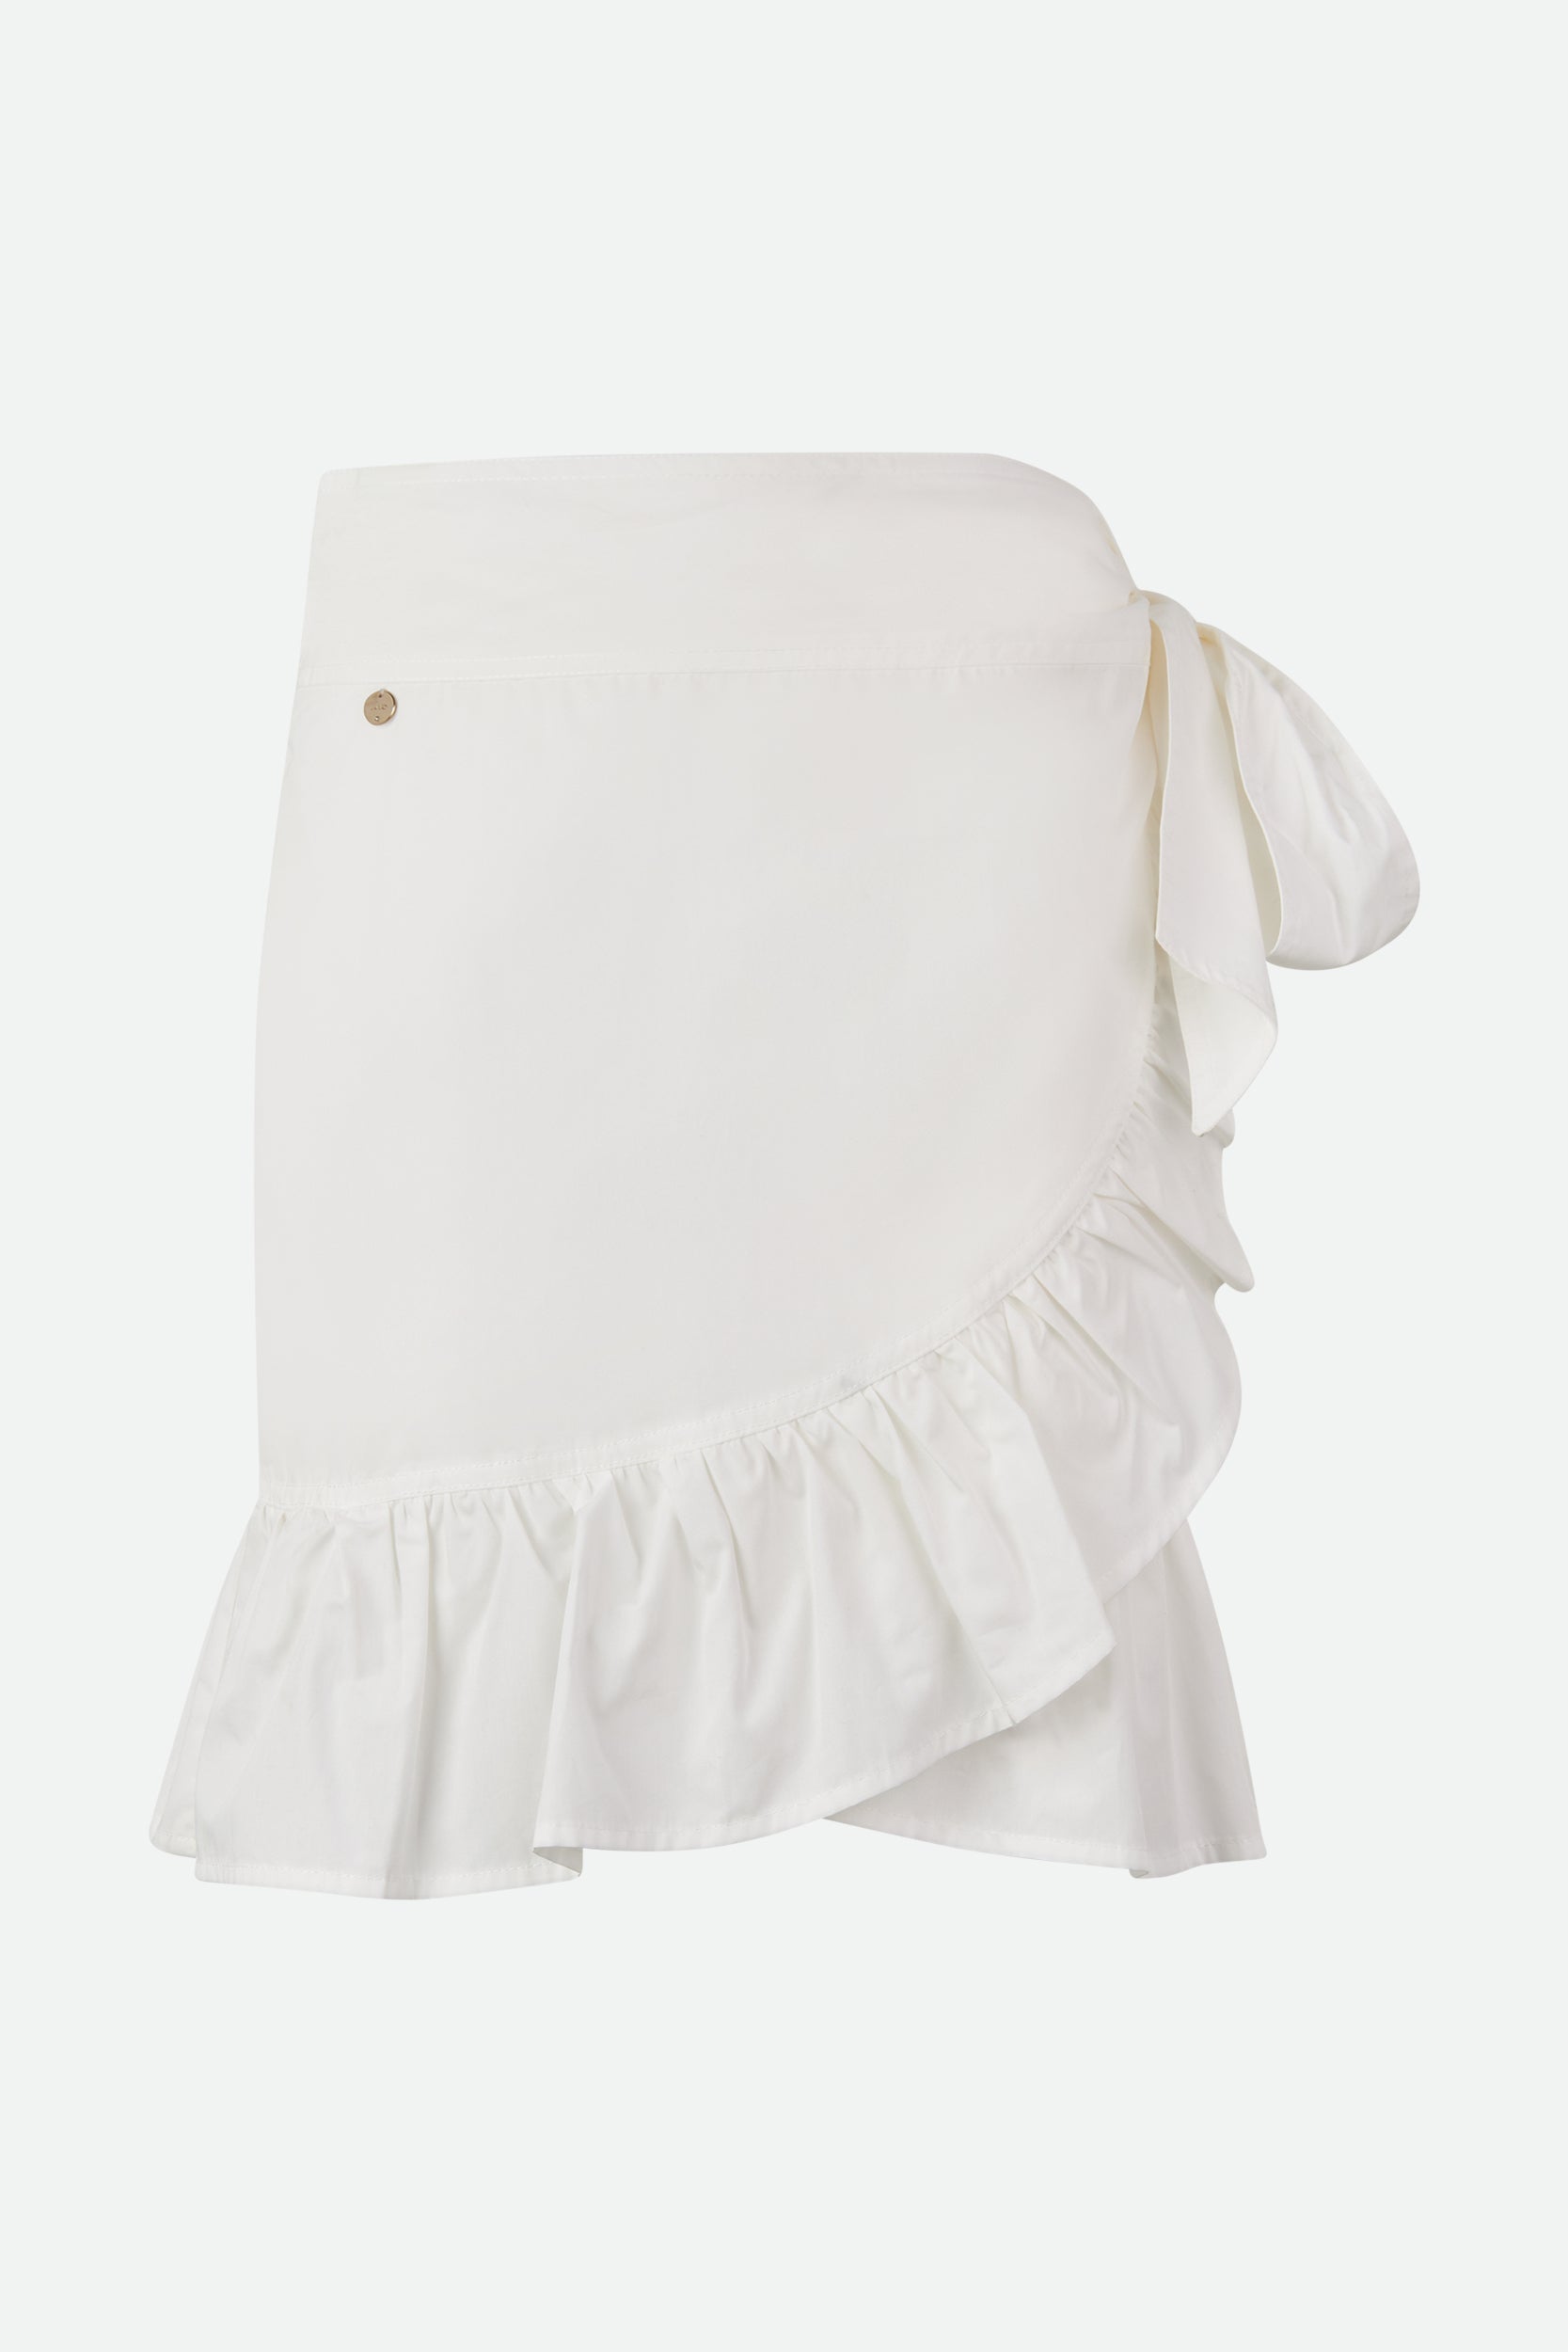 Liu Jo White Skirt